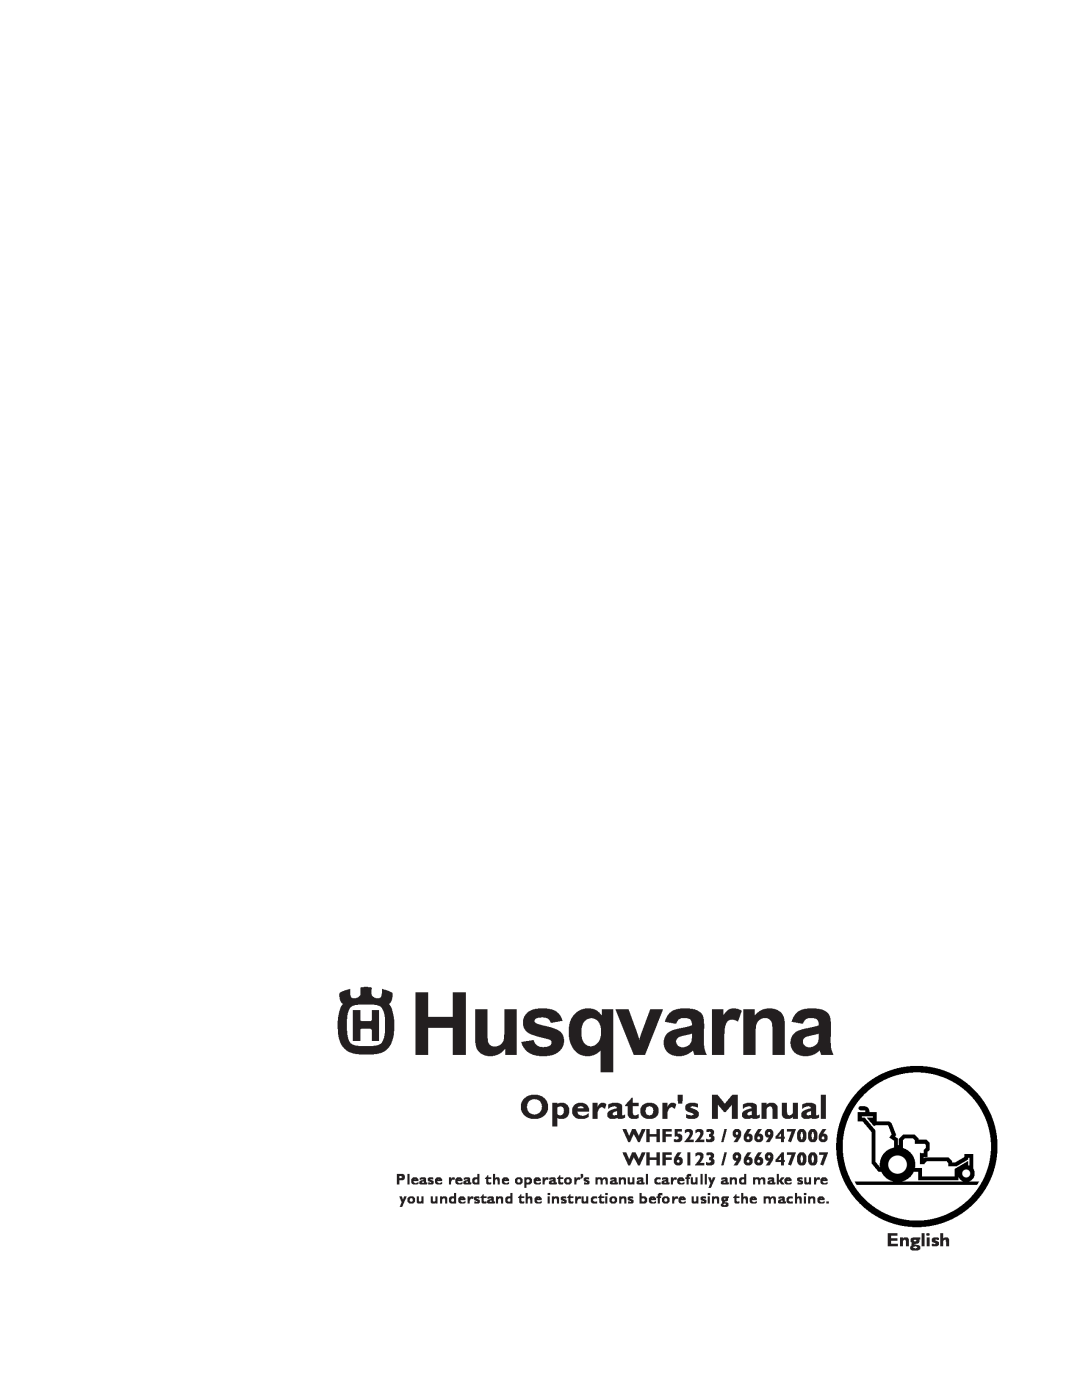 Husqvarna WHF5223 / 966947006, WHF6123 / 966947007 manual Operators Manual, WHF5223 / WHF6123, English 